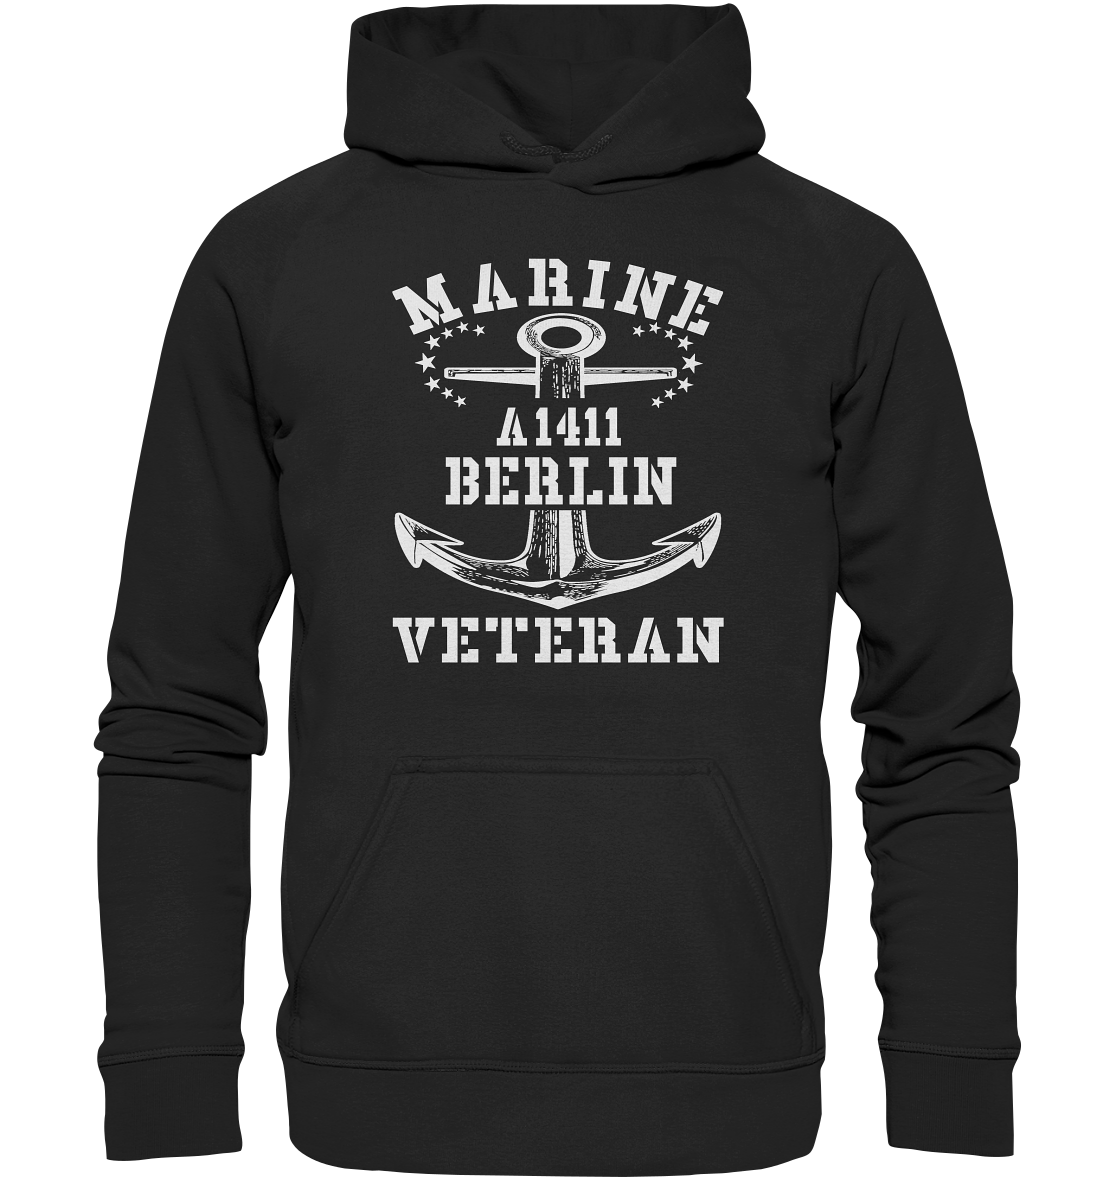 EGV A1411 BERLIN Marine Veteran - Basic Unisex Hoodie XL